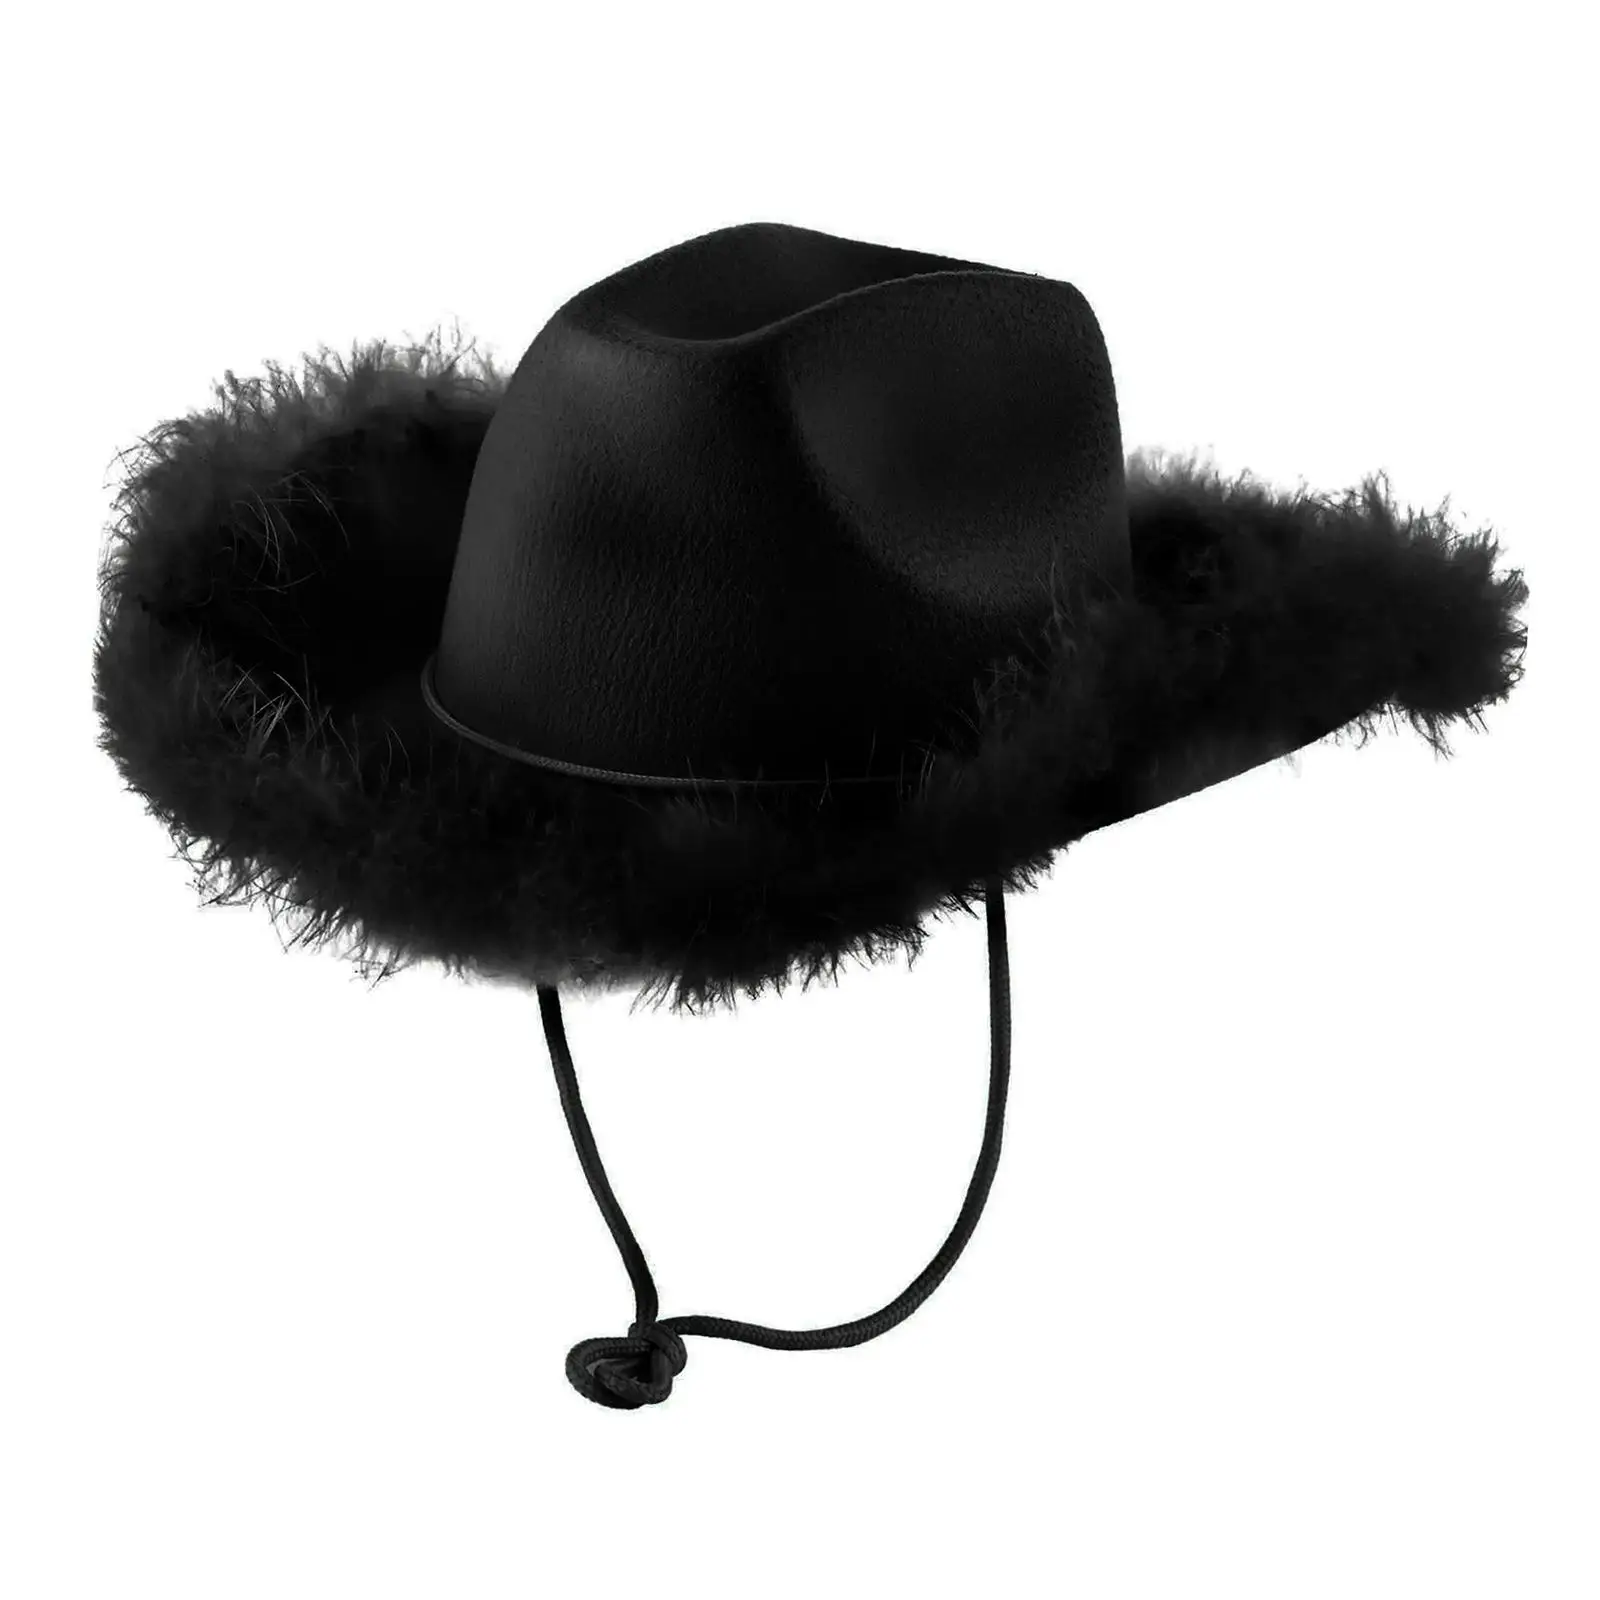 Western  Hat Stylish Wide Brim Outdoor Sunshade Hat Comfortable Versatile Sunhat for Parties Street Cosplay Hiking Beach